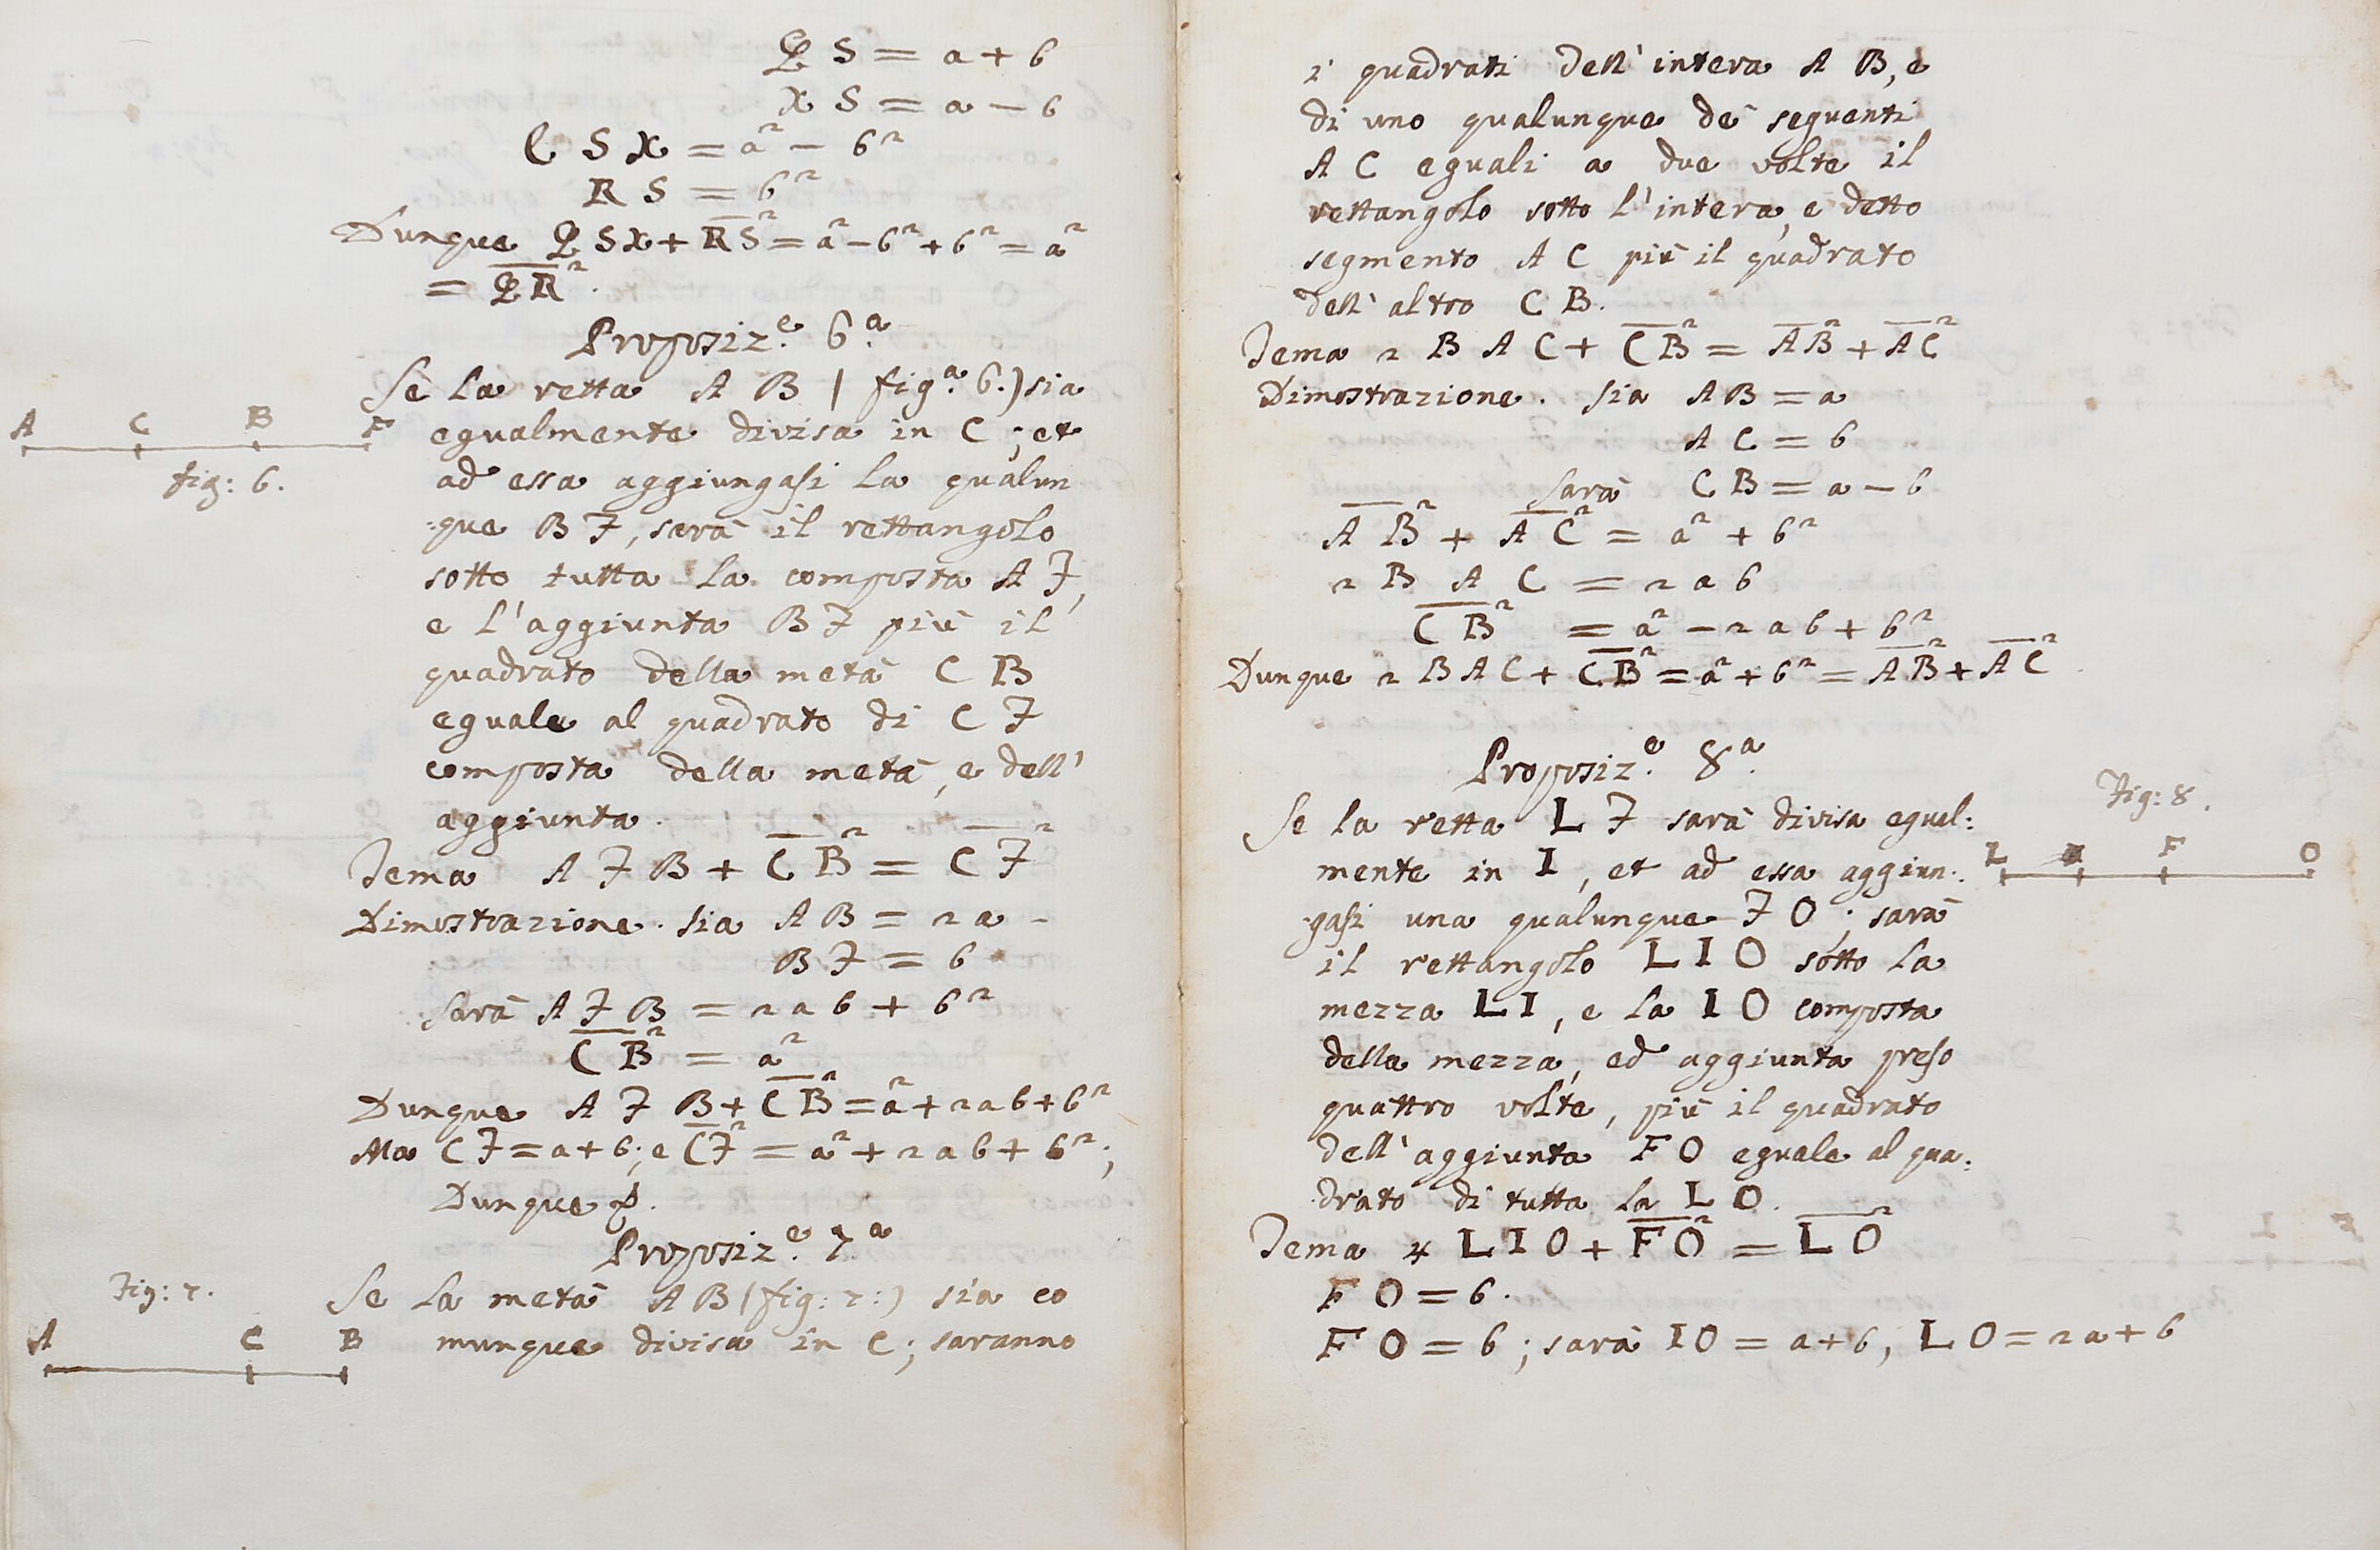 Italian Manuscript on Geometry.- Libro Secondo d'Euclide and Geometria Pratica, ink manuscript in